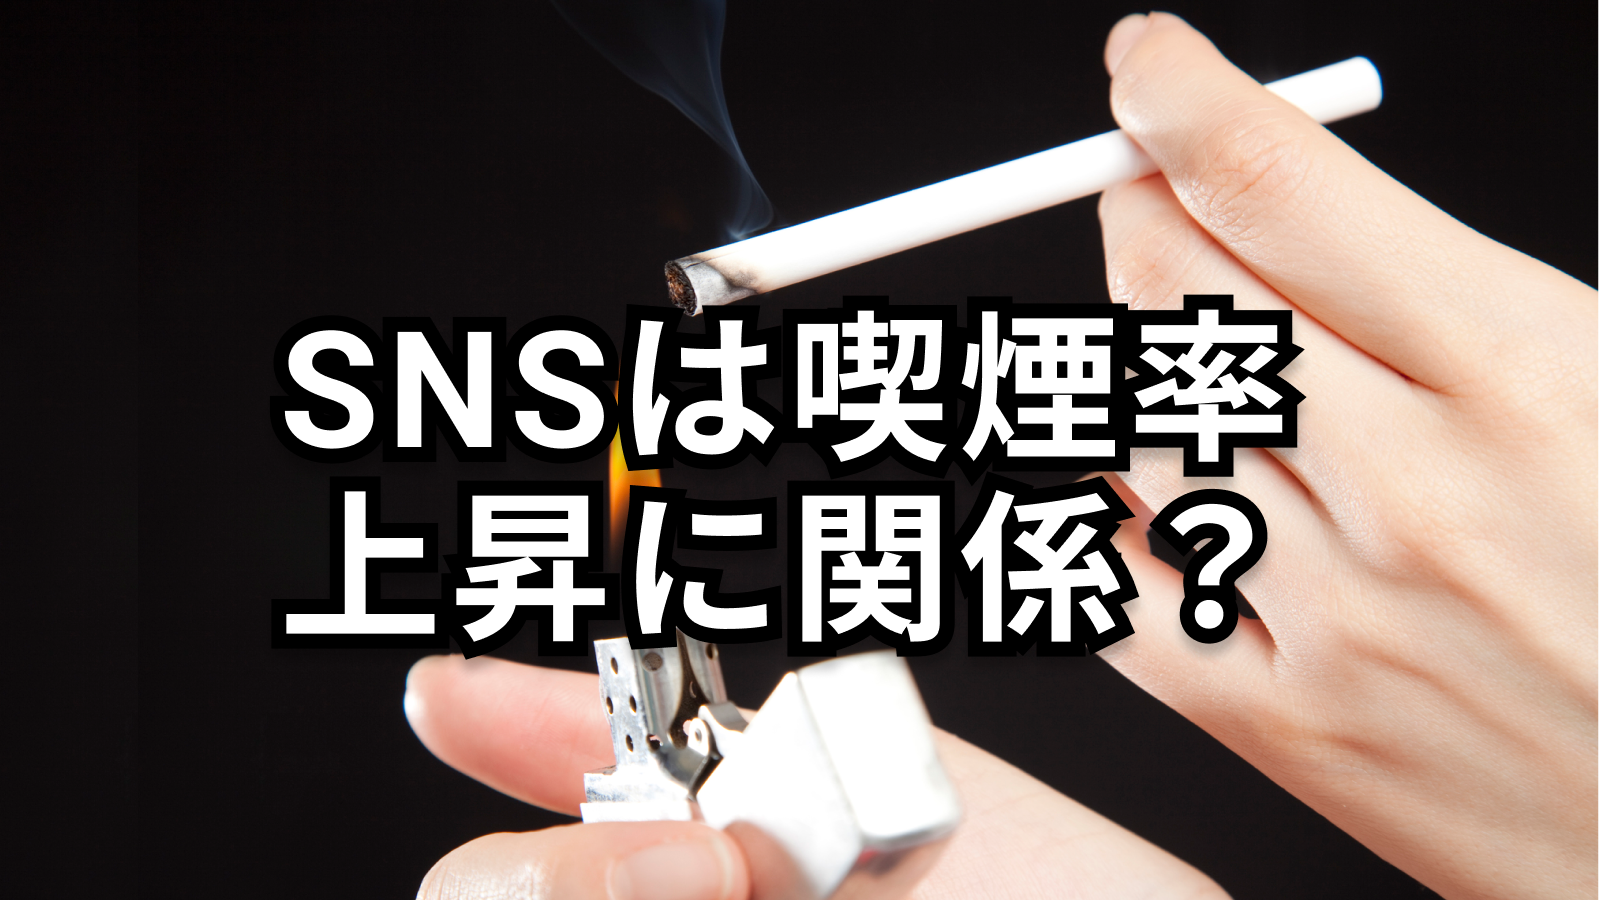 【JAMA Pediatr】SNS上の｢たばこ｣関連コンテンツ､ 若年層の喫煙行動に影響